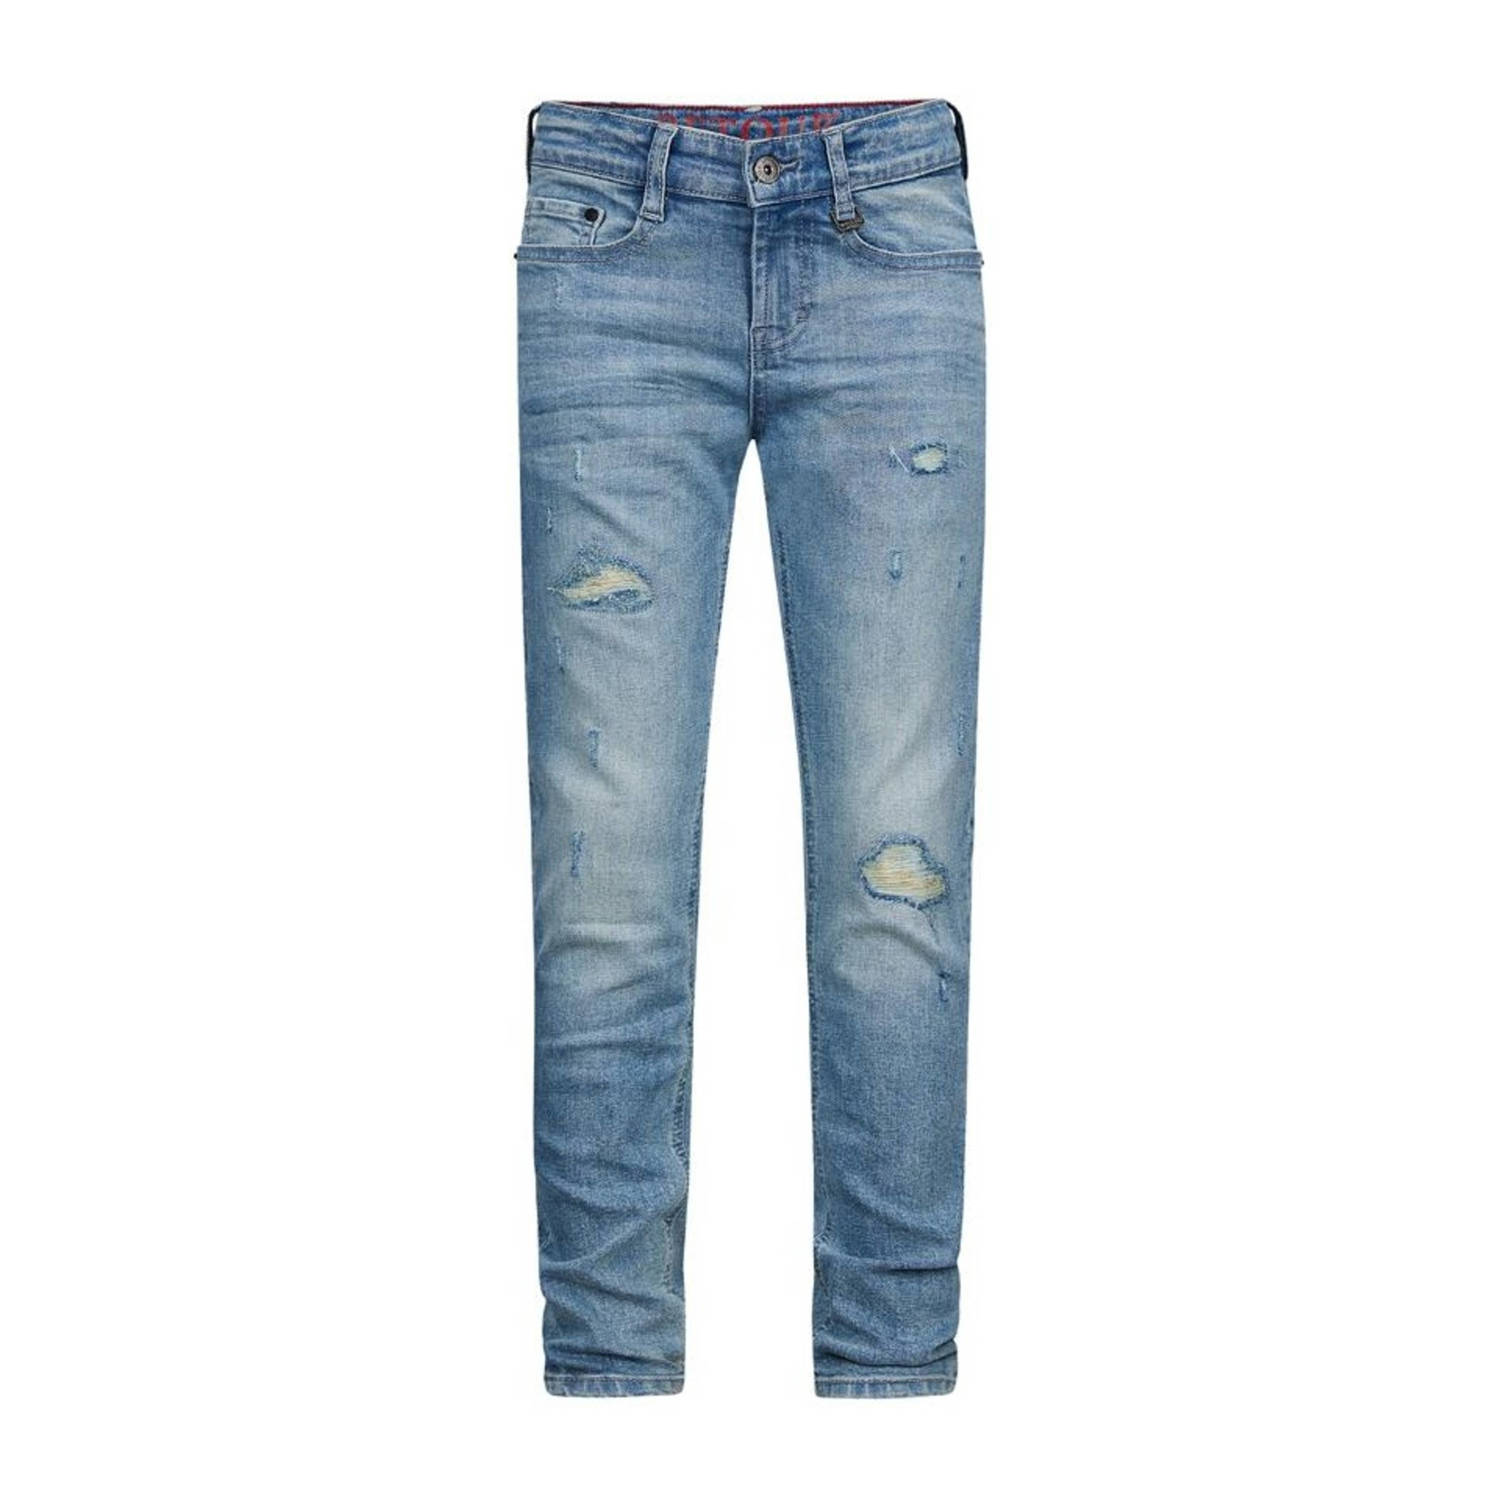 Retour Jeans tapered fit jeans Wulf Repair light blue denim